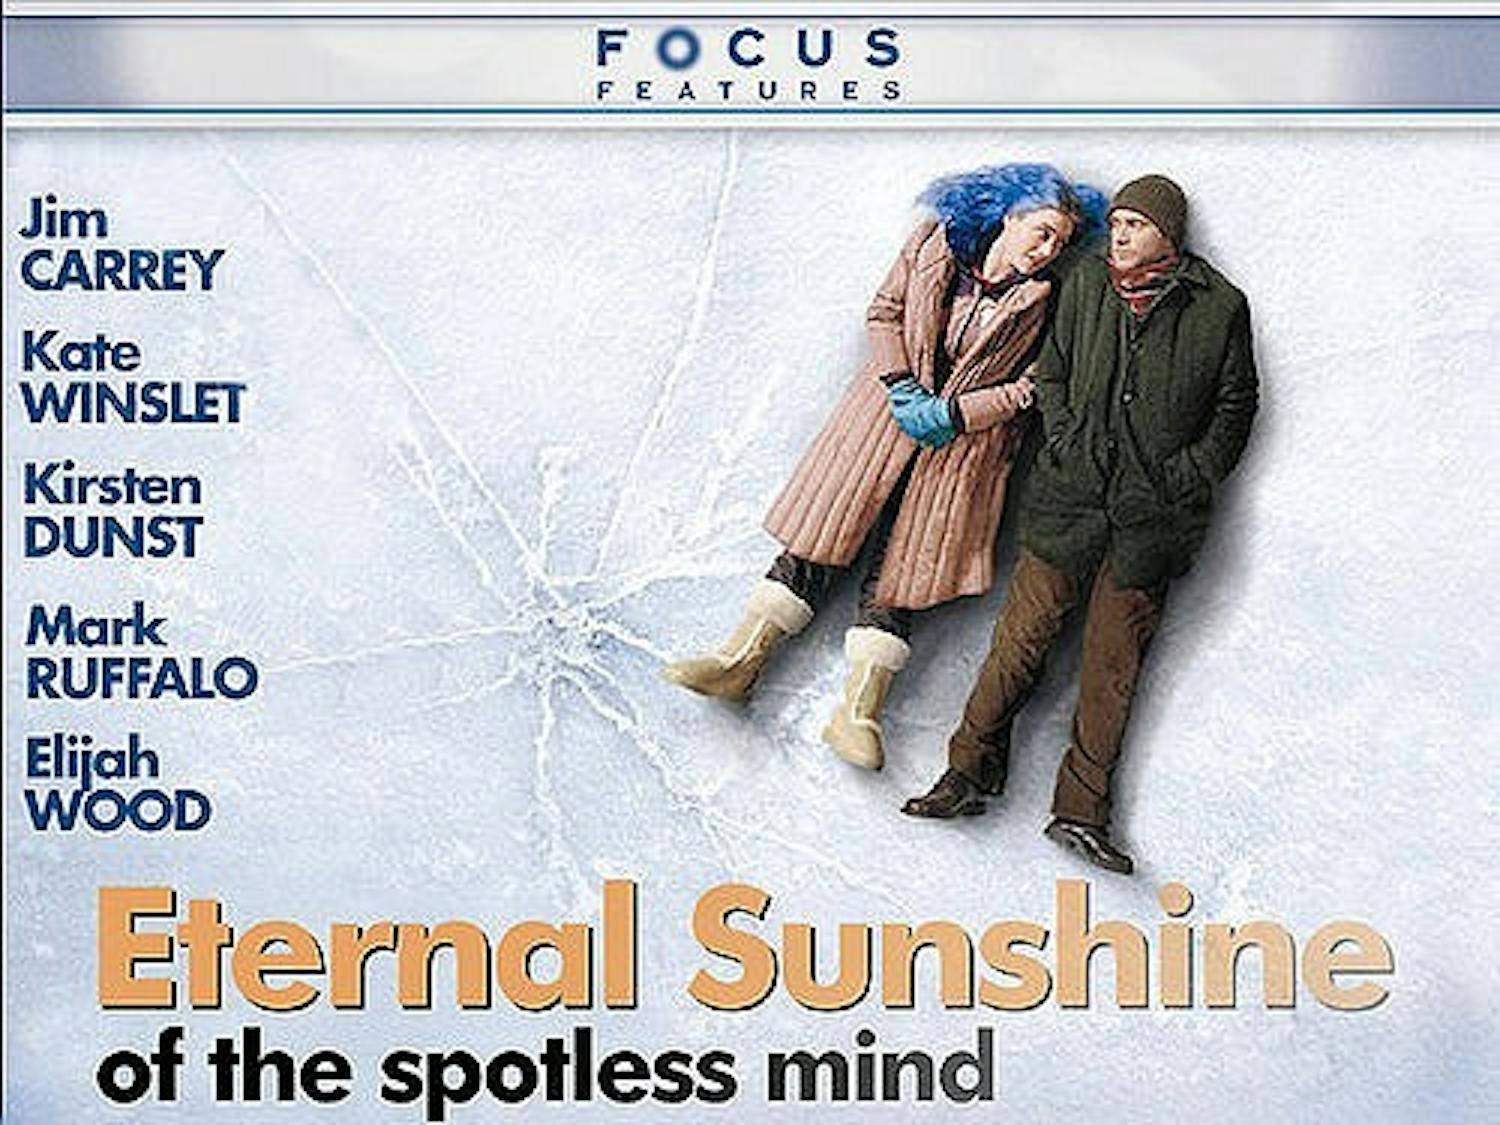 "Eternal Sunshine of the Spotless Mind" won an Academy Award in 2004 for Best Original Screenplay.